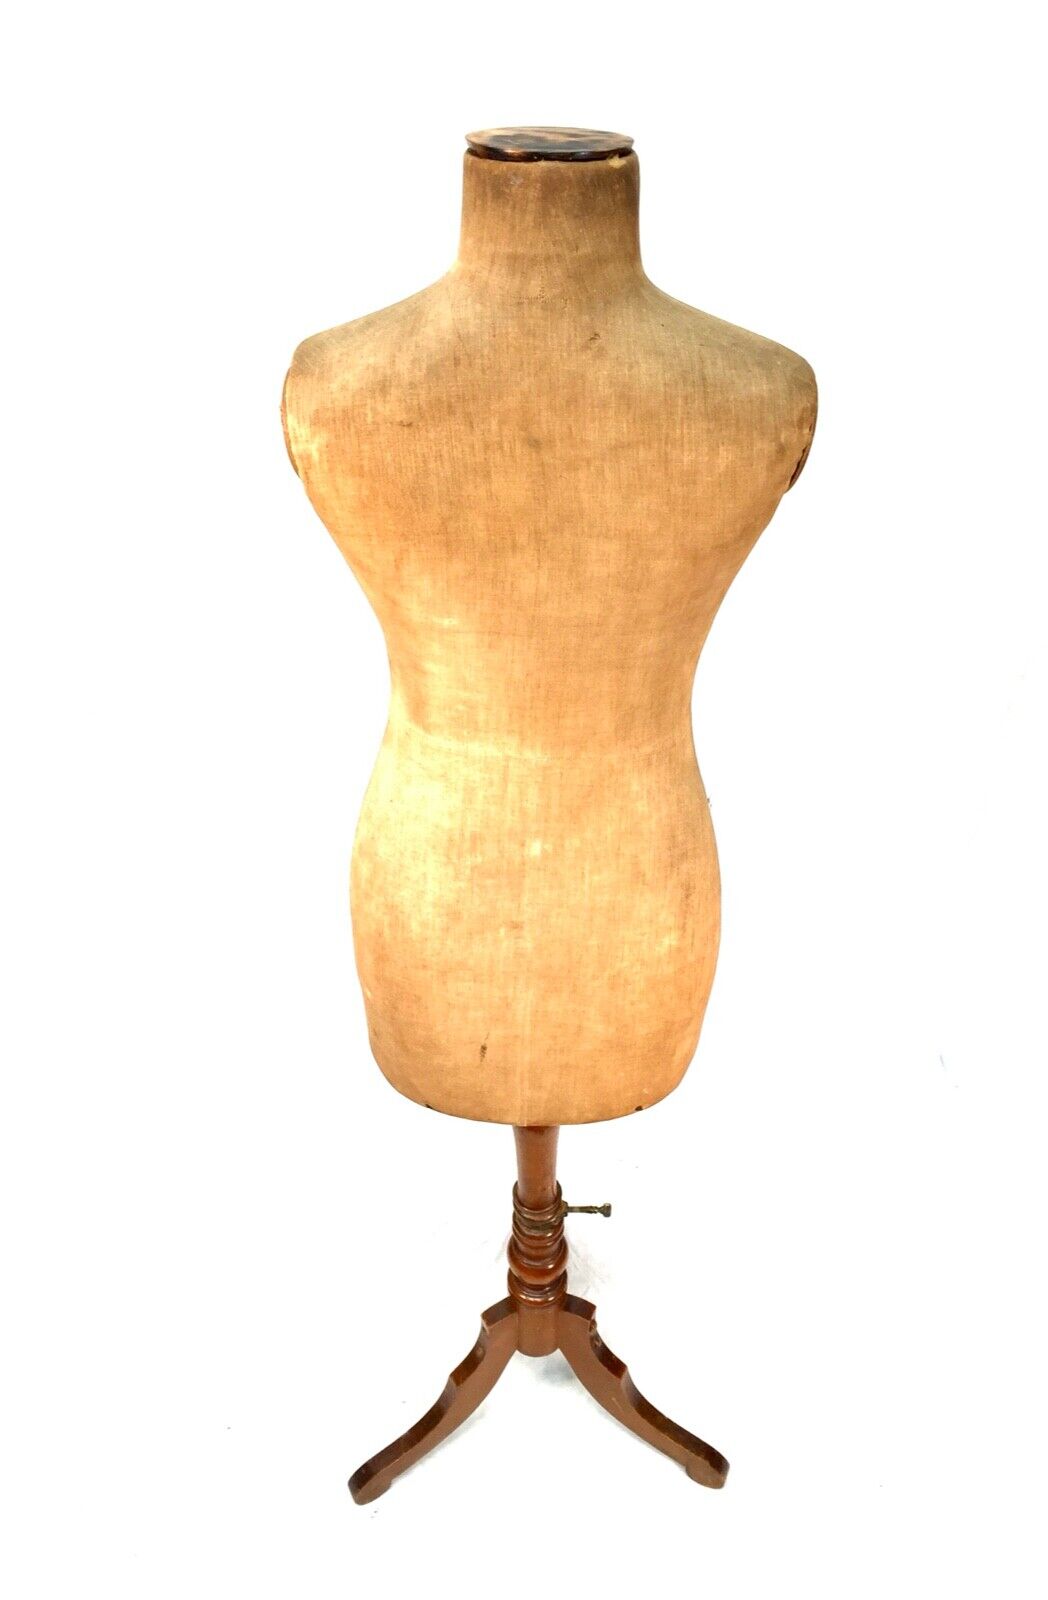 Antique Dress Makers Mannequin Stand Dummy / Wooden Base / Shop Display / c.1930